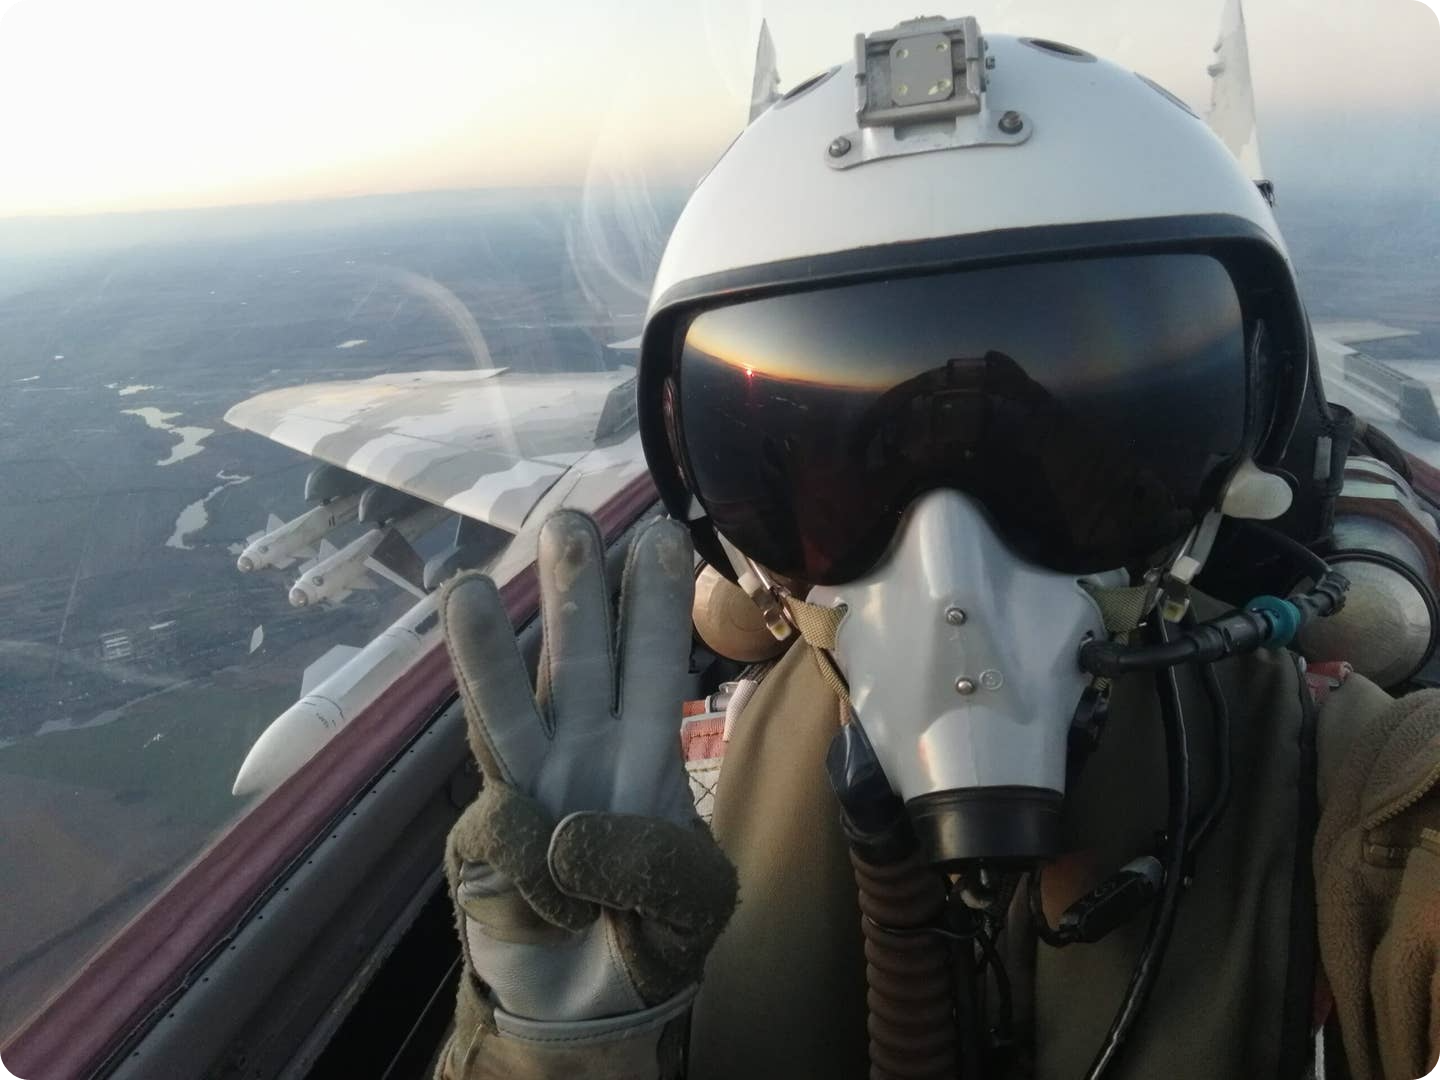 Mig-29를 탑승하고 있는 ‘Juice’는 우크라이나 국가 상징인 삼지창을 손가락으로 표현하고 있다.